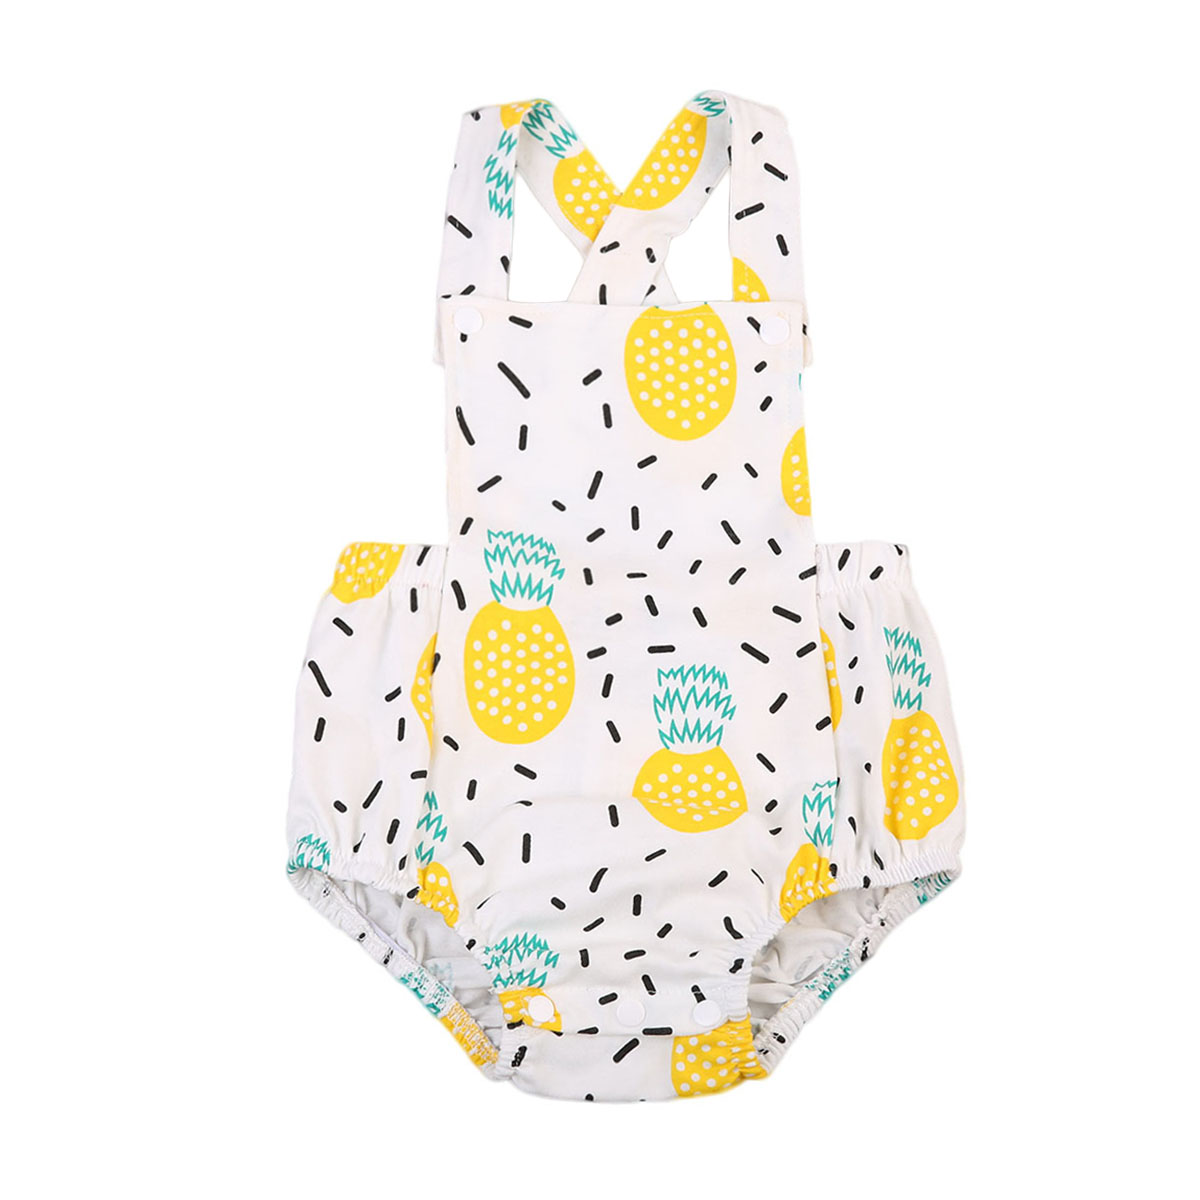 Schattige Baby Meisje Kleding Ananas Print Mouwloze Romper Terug Cross Jumpsuit Outfit Playsuit Sunsuit Kleding